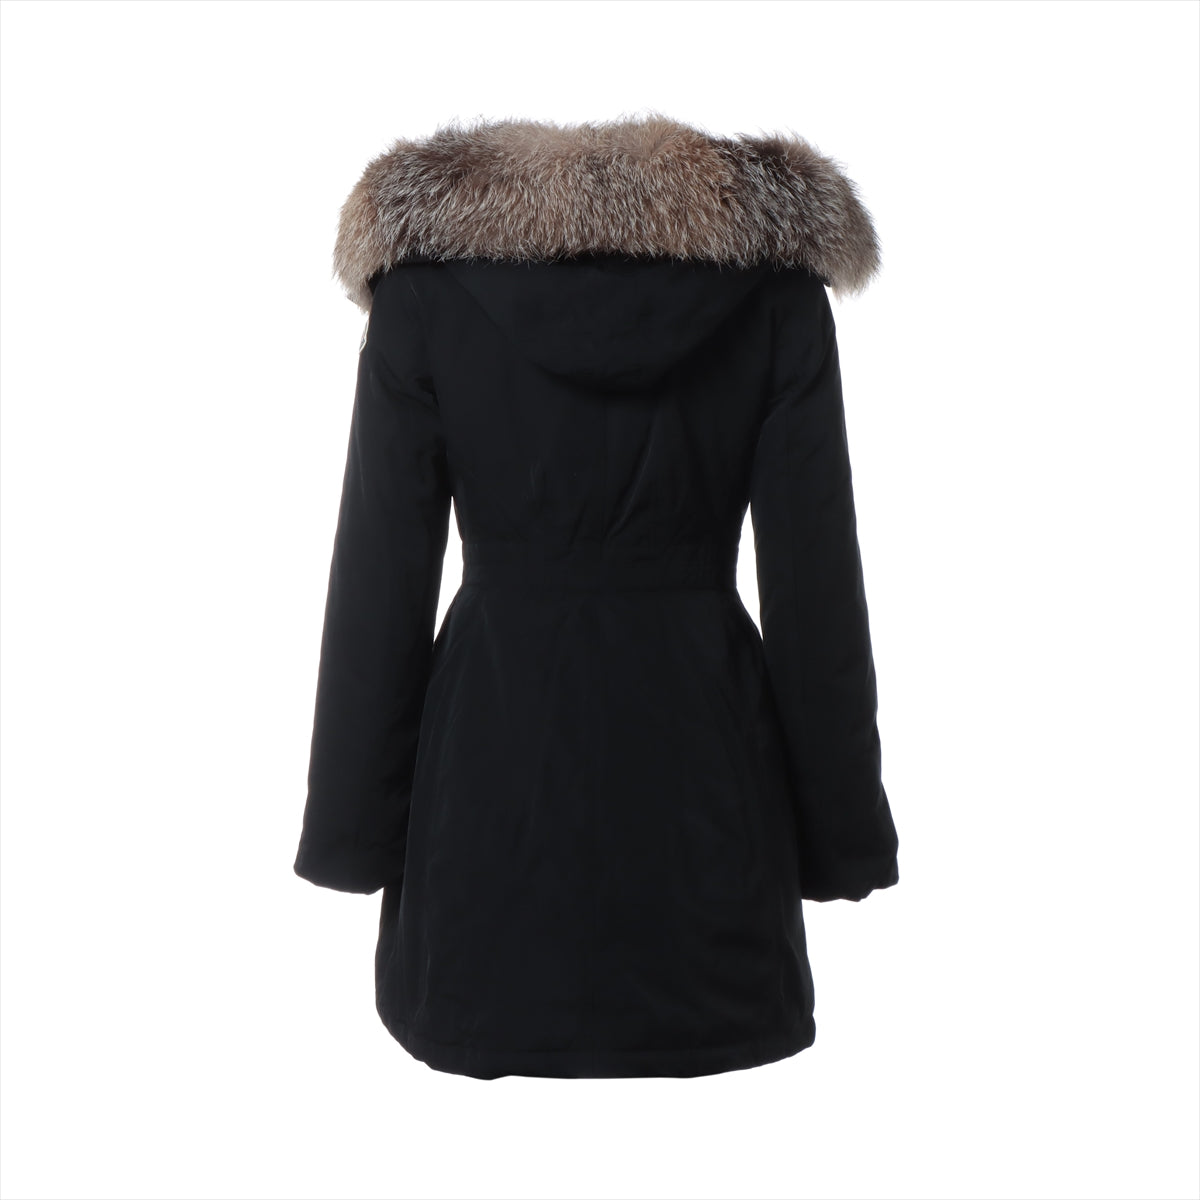 Moncler MONTICOLE 18 years Cotton x polyester x nylon Down coat 0 Ladies' Black  Removable fur